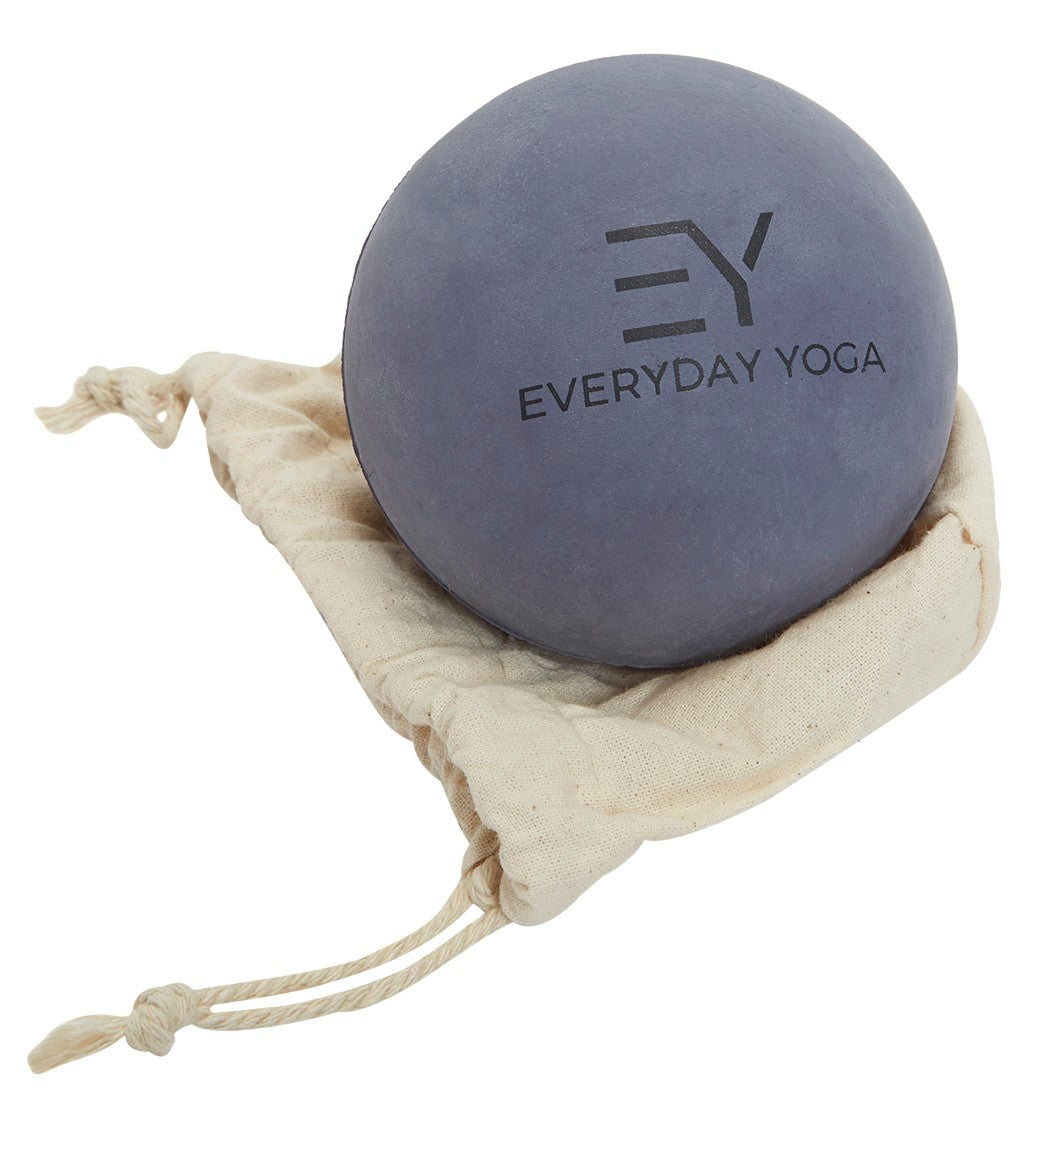 Everyday Yoga 3.5 Inch Yoga Massage Therapy Ball